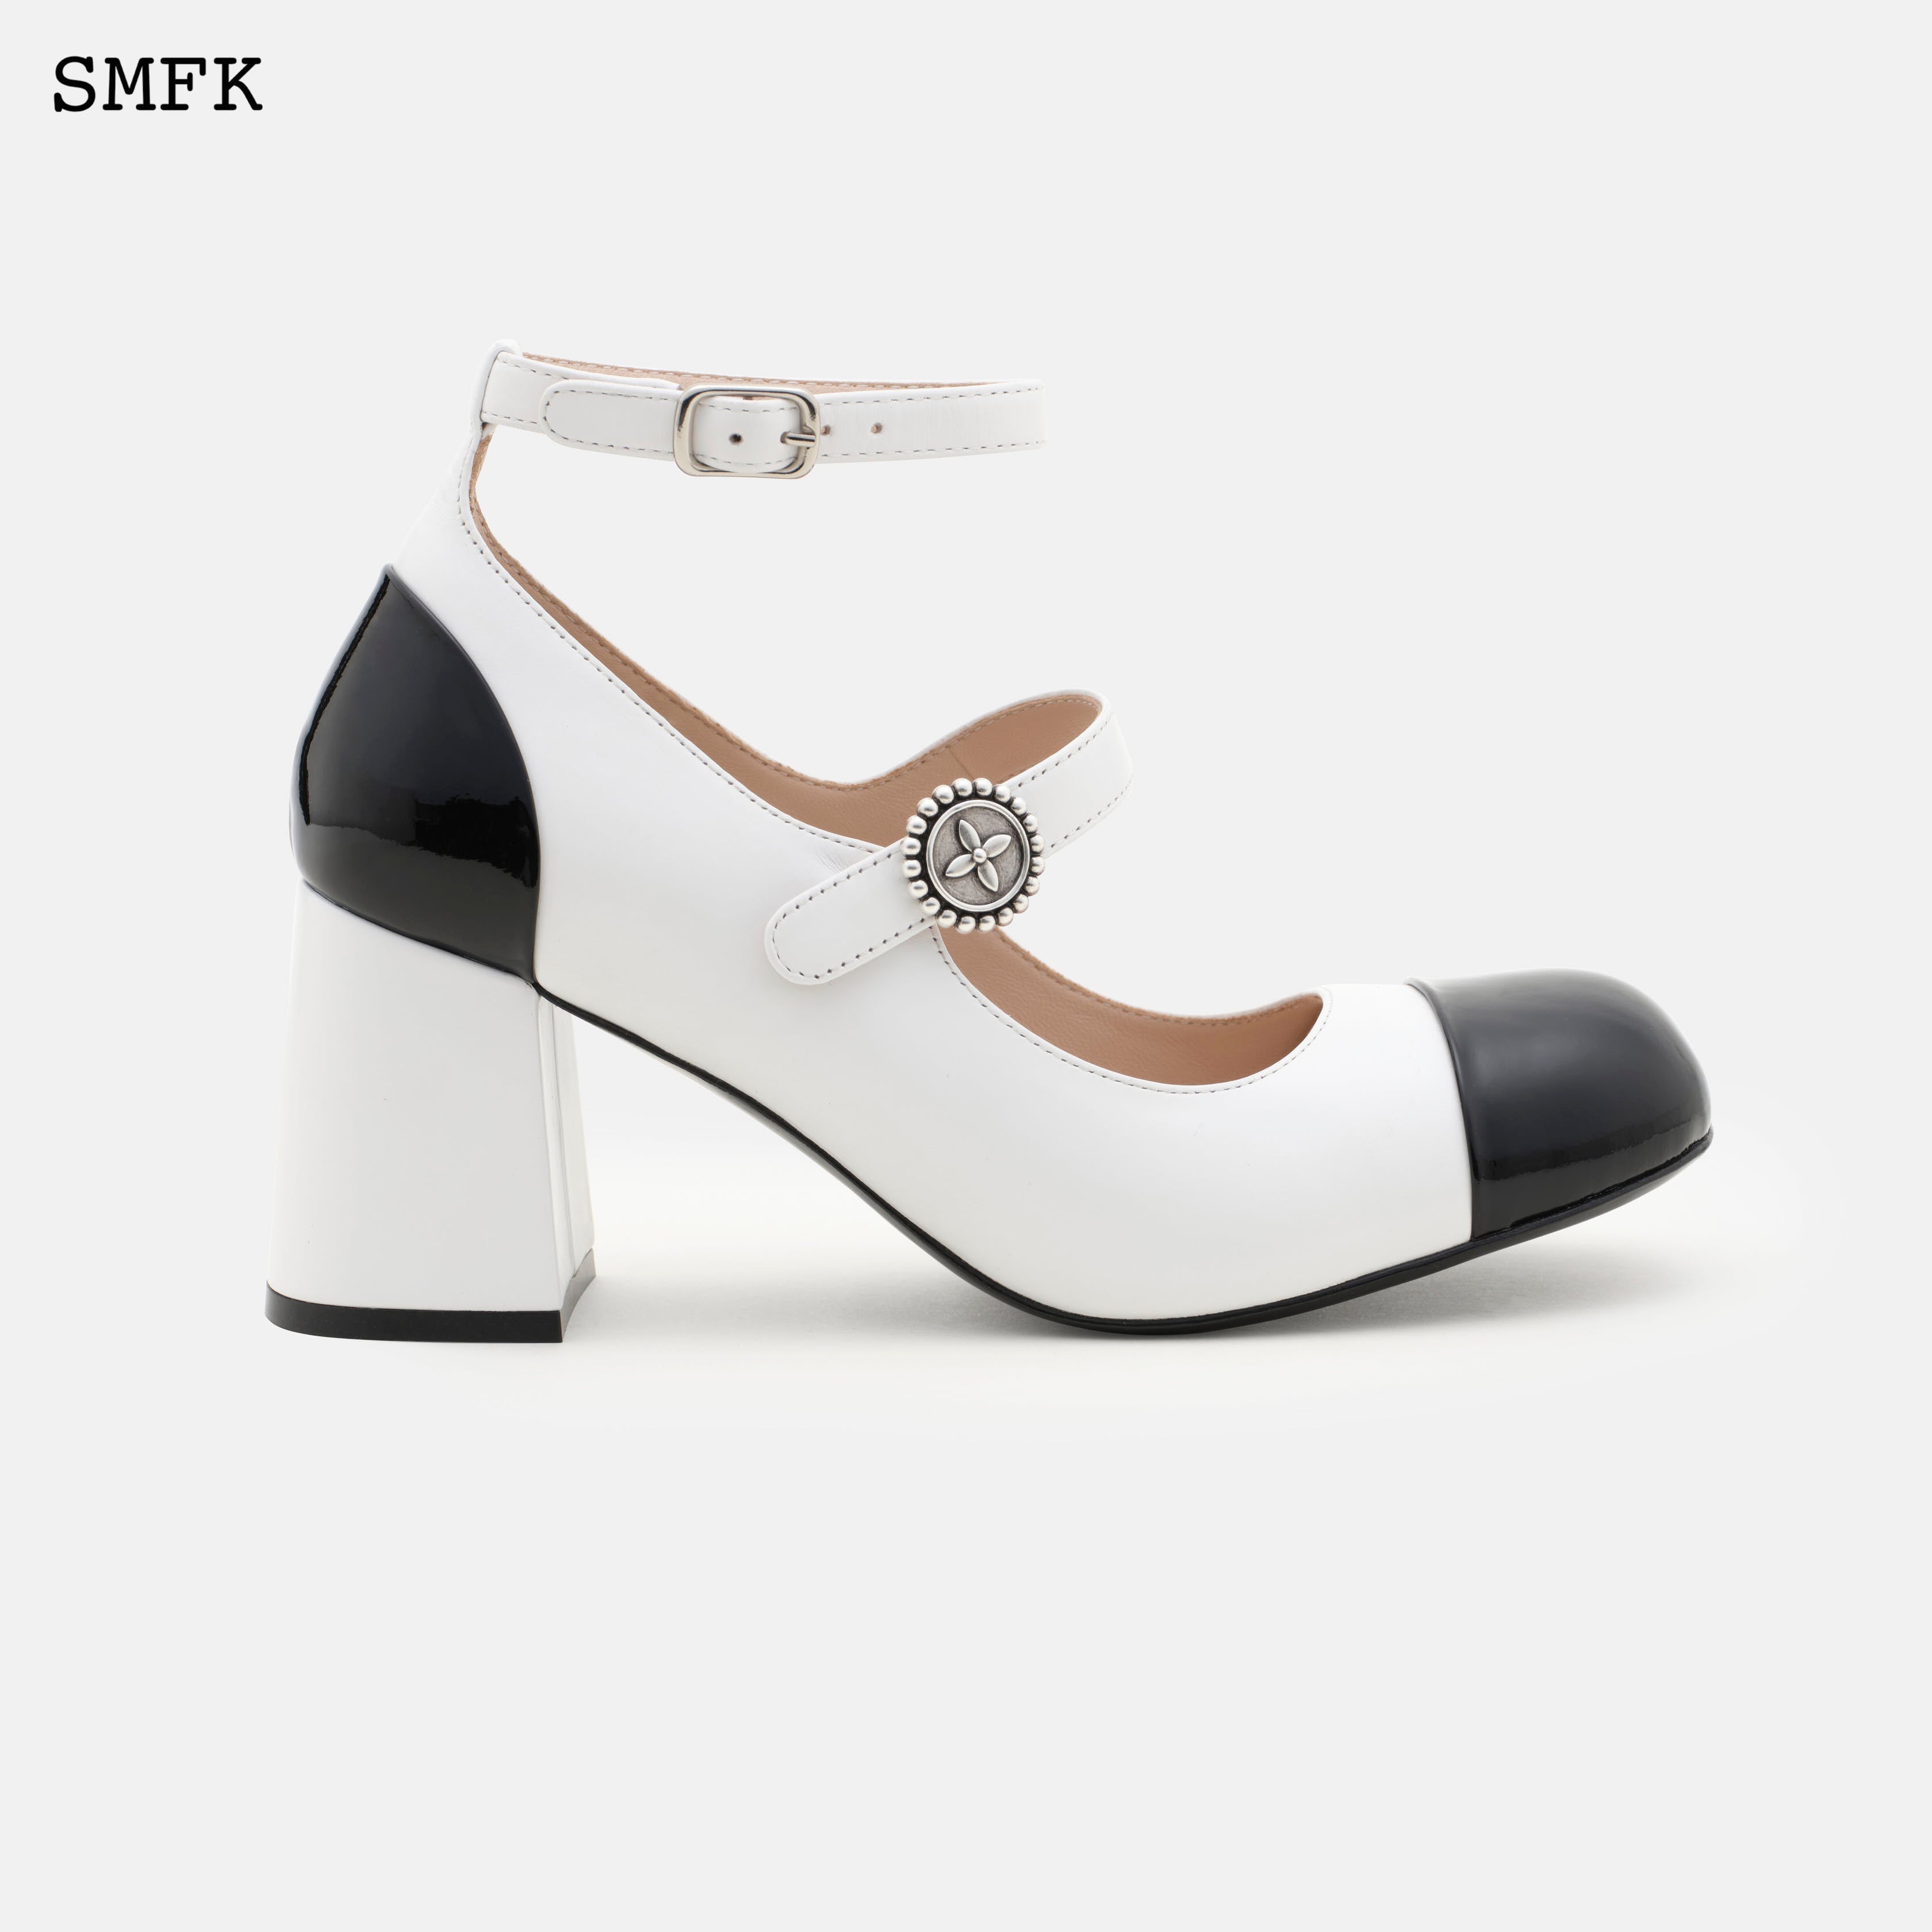 Calla Shoes | Mary Jane | Black Leather block heel